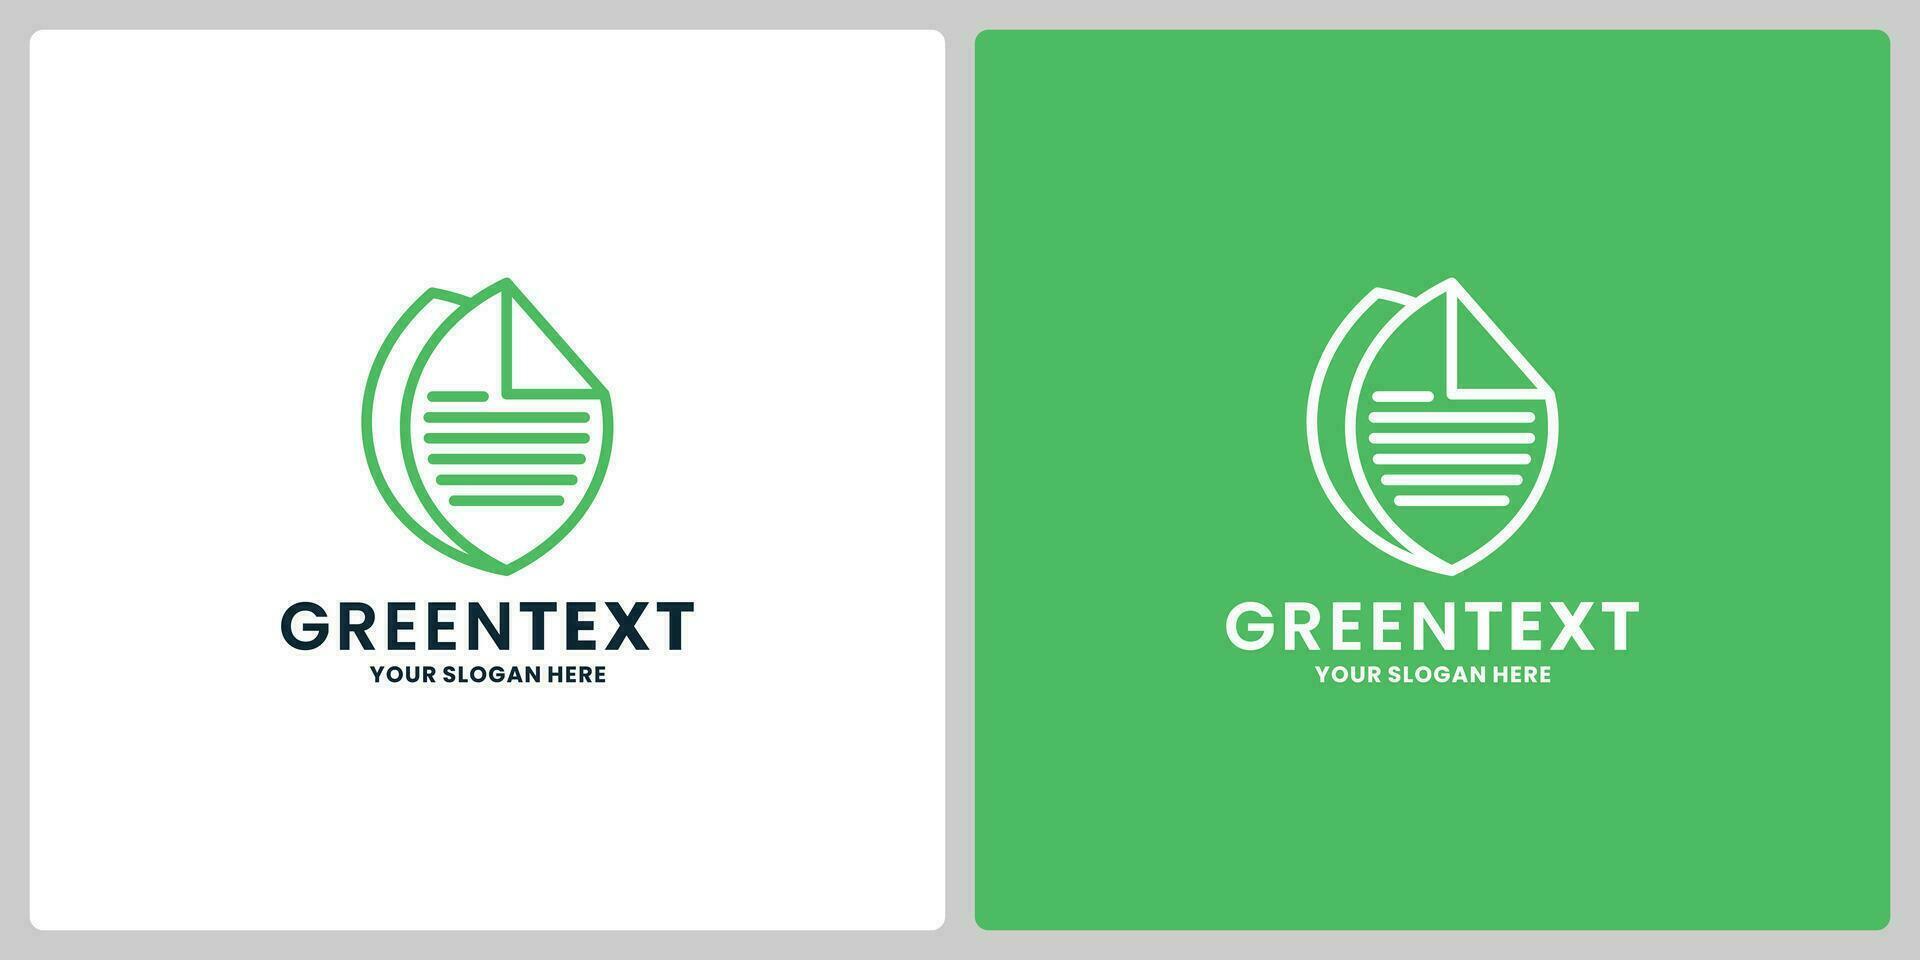 green text, leaf text logo design inspiration vector